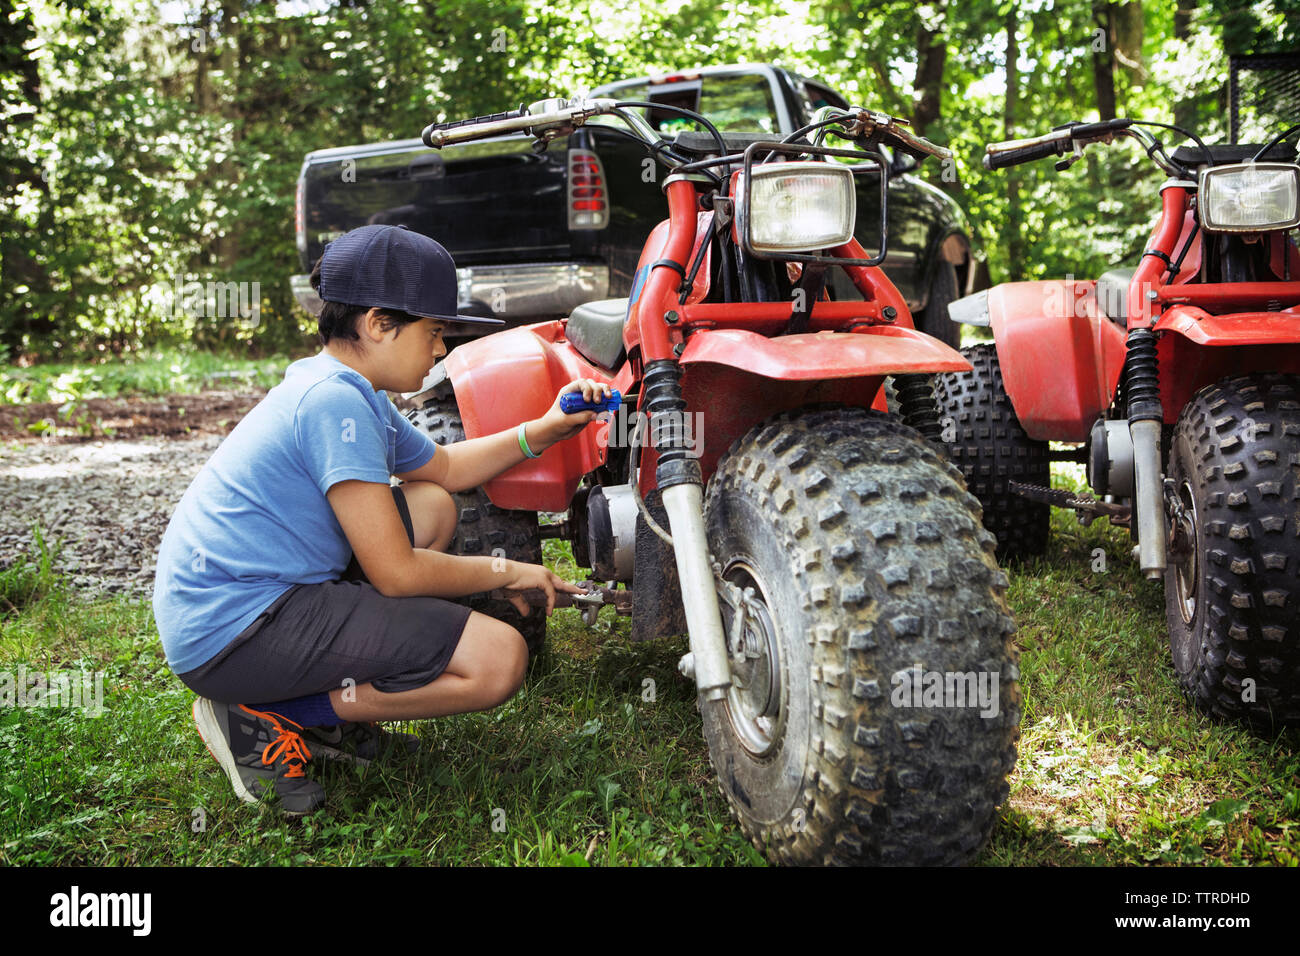 Boy repairing ATV on grass field Stock Photo